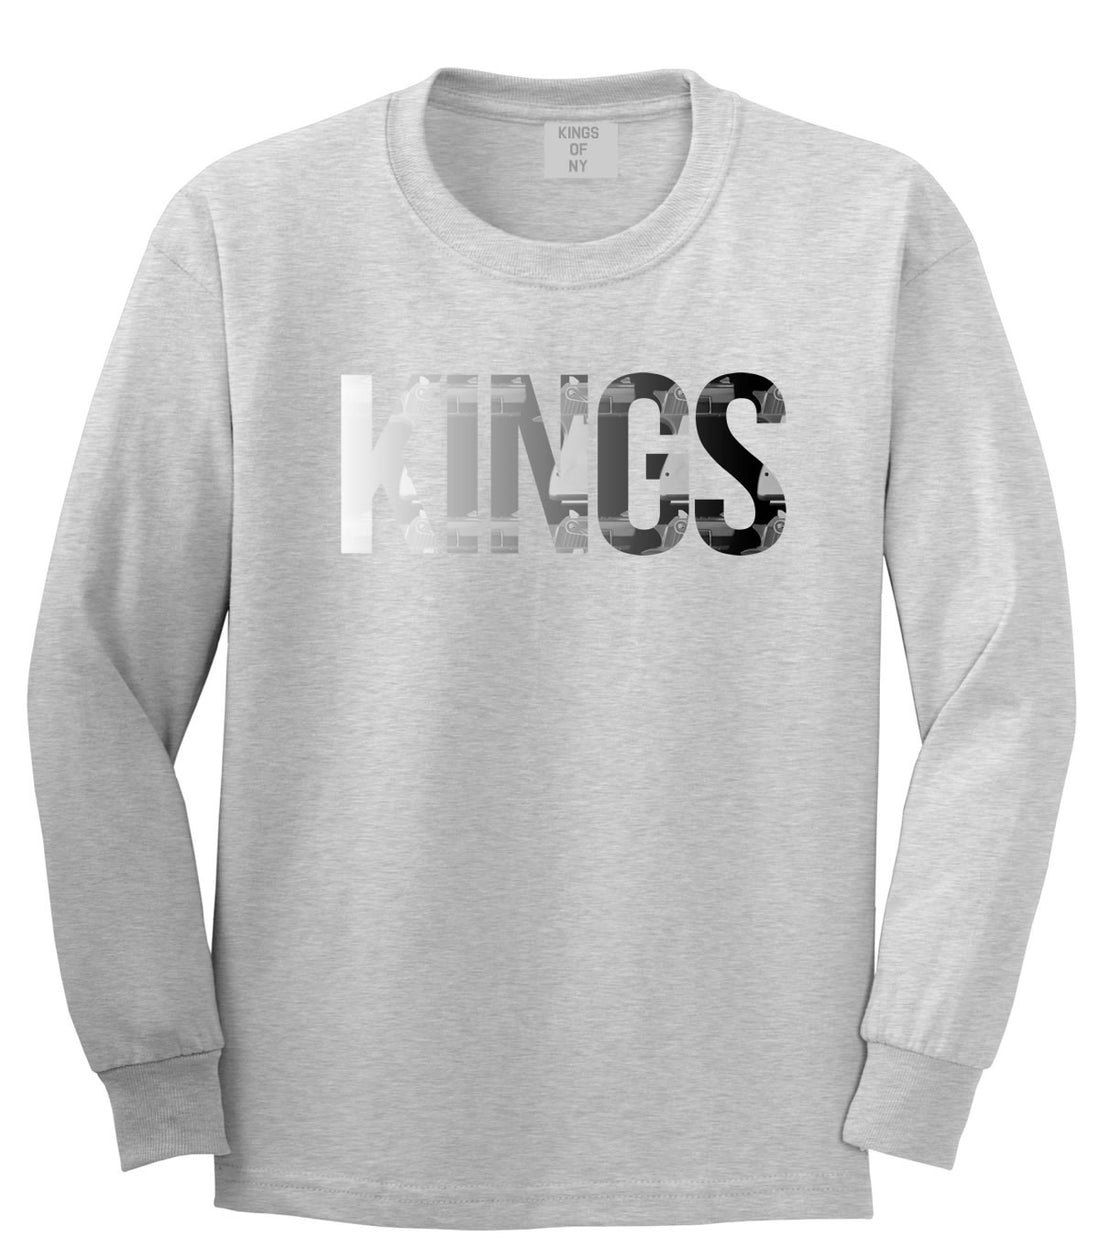 KINGS Gun Pattern Print Boys Kids Long Sleeve T-Shirt in Grey by Kings Of NY